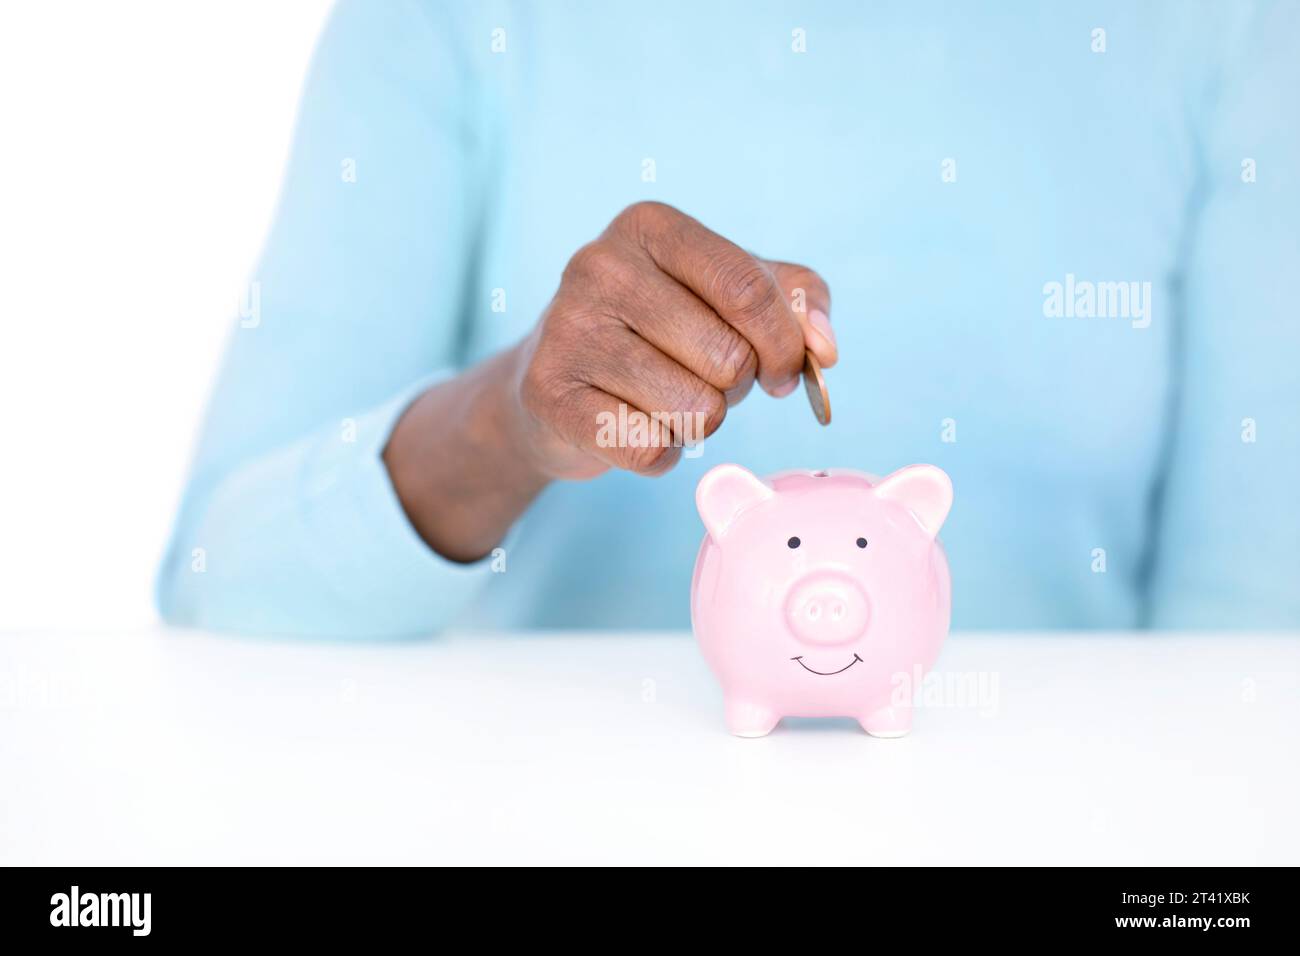 Woman saving money Stock Photo